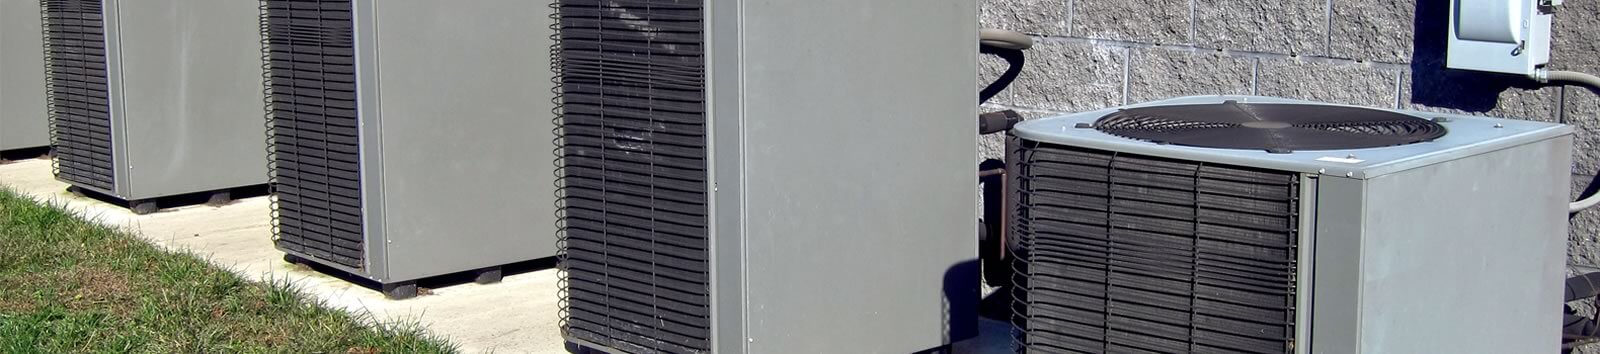 Air Conditioner Repair company in Victoria Texas